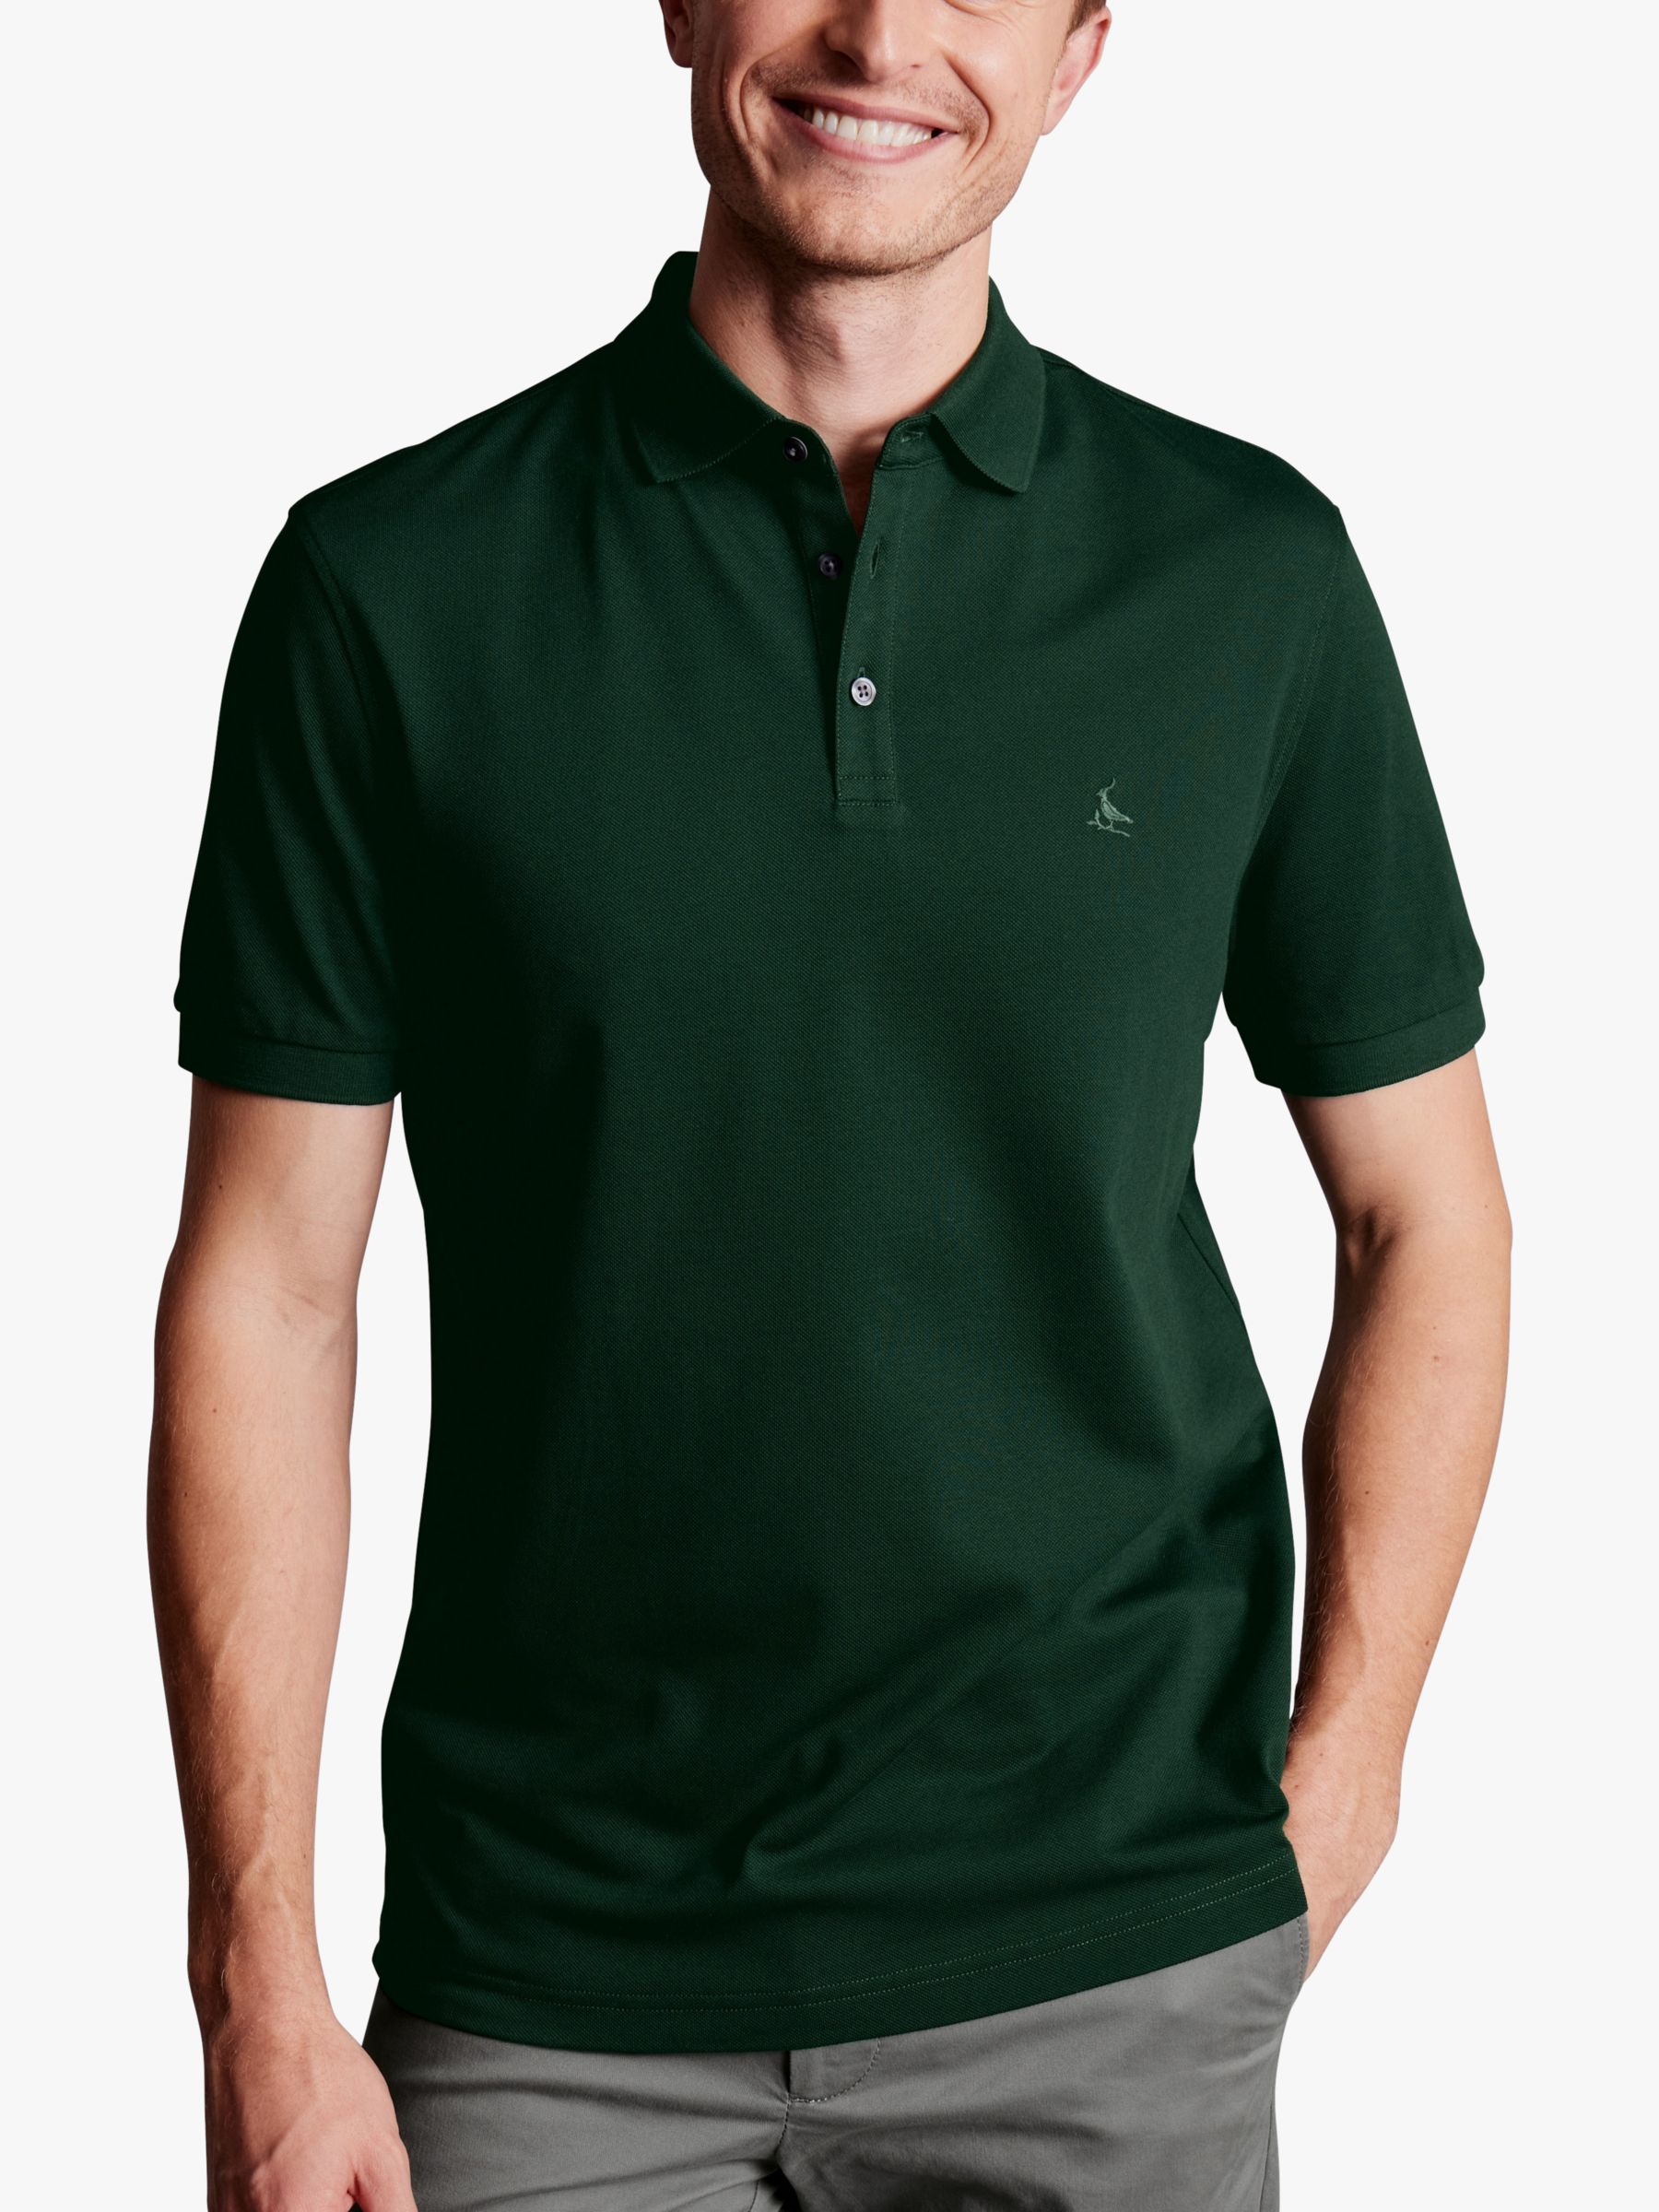 Charles Tyrwhitt Short Sleeve Pique Polo Shirt, Dark Green, S